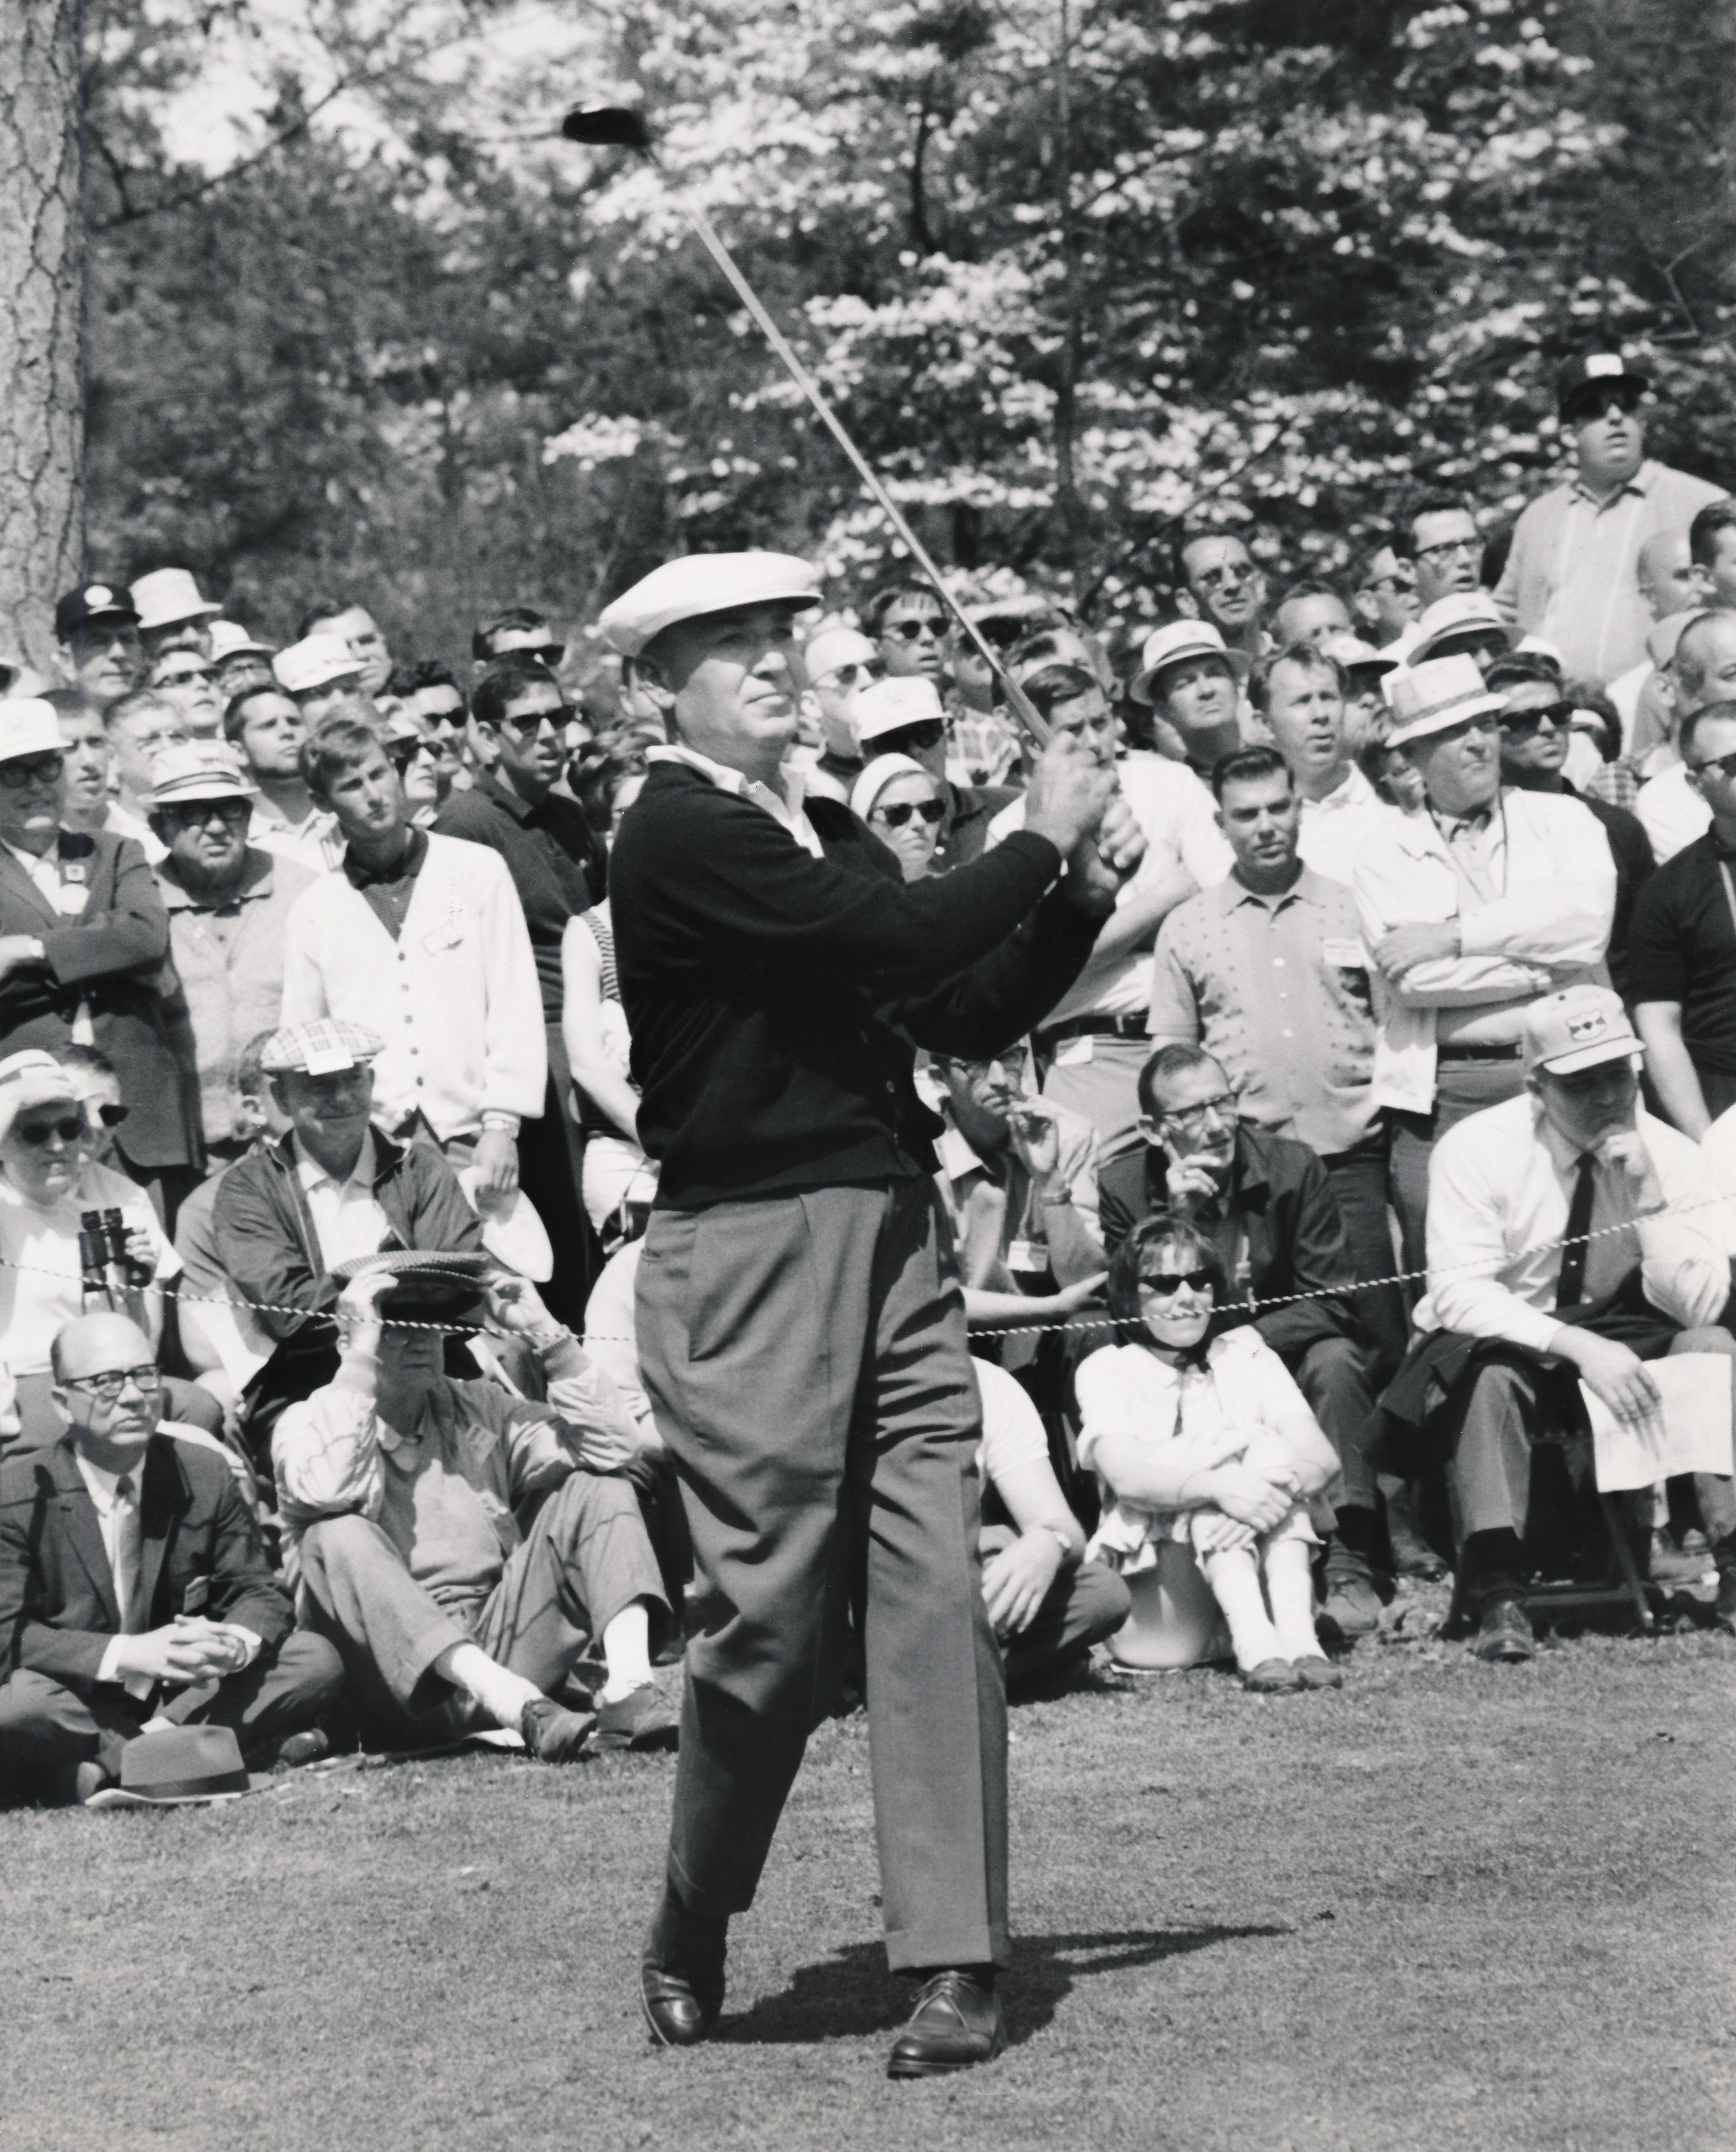 Morgan Fitz Portrait Photograph - Ben Hogan: Golf Master Letting it Fly